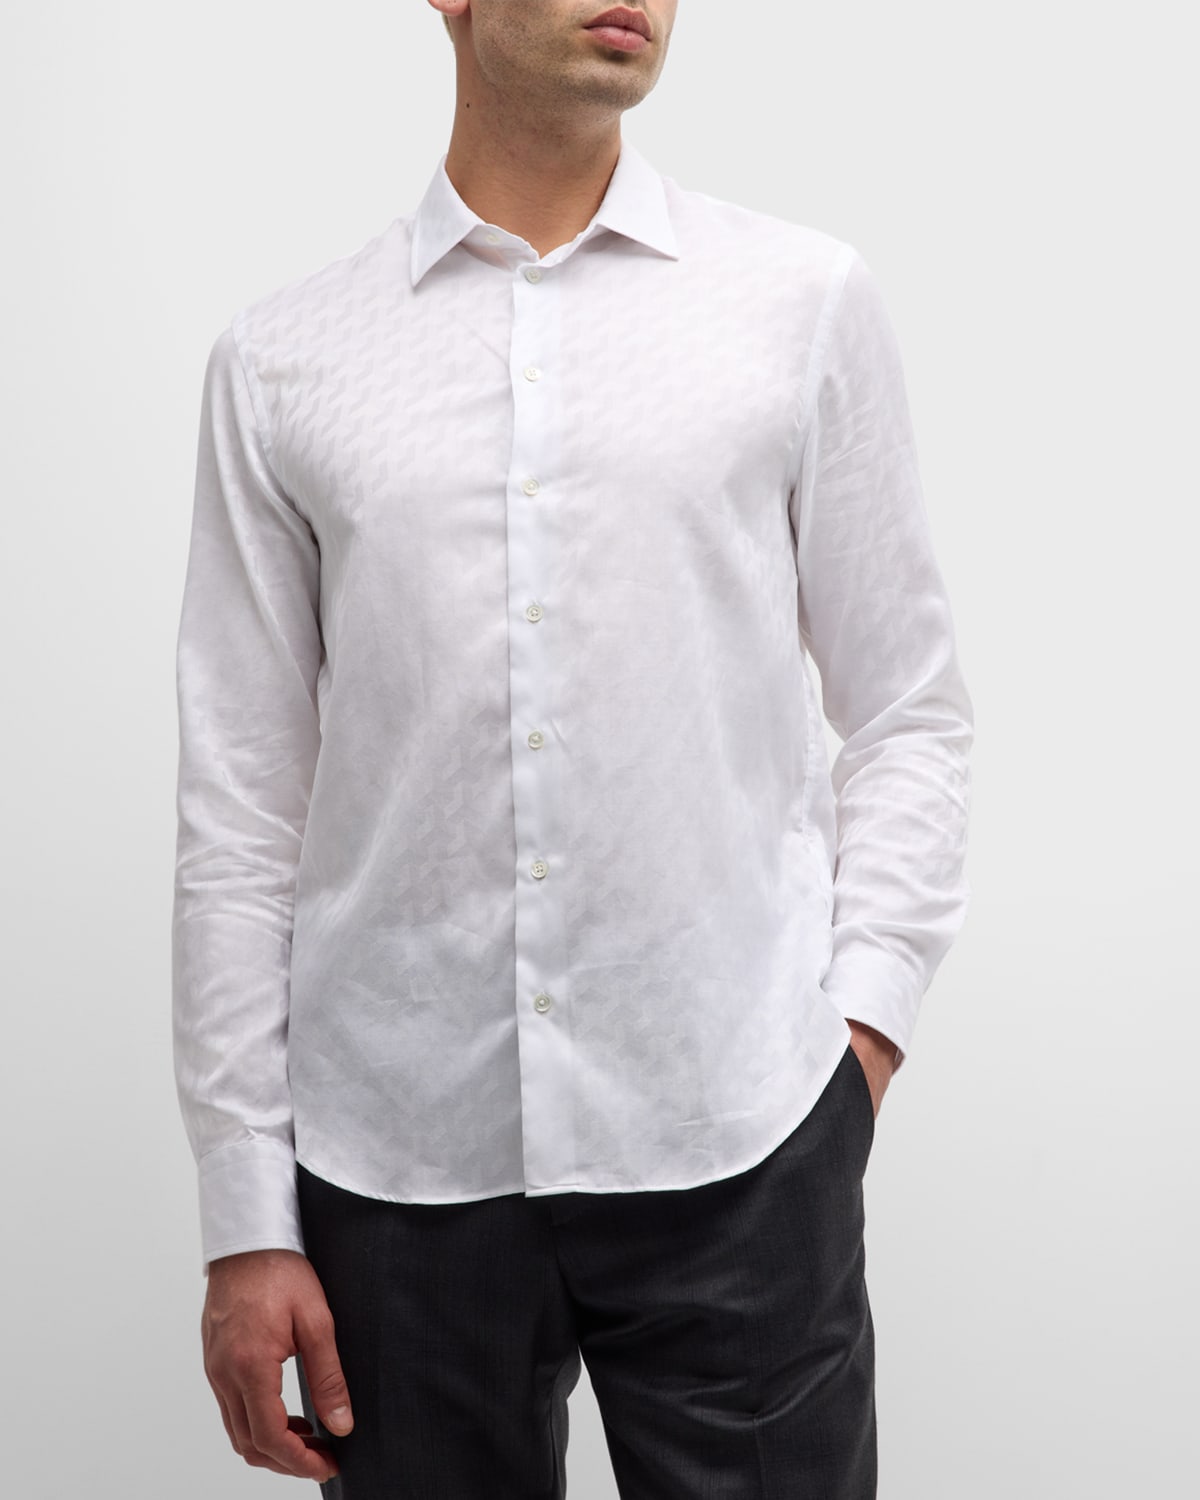 Emporio Armani Men's Cotton Jacquard Sport Shirt In Brown